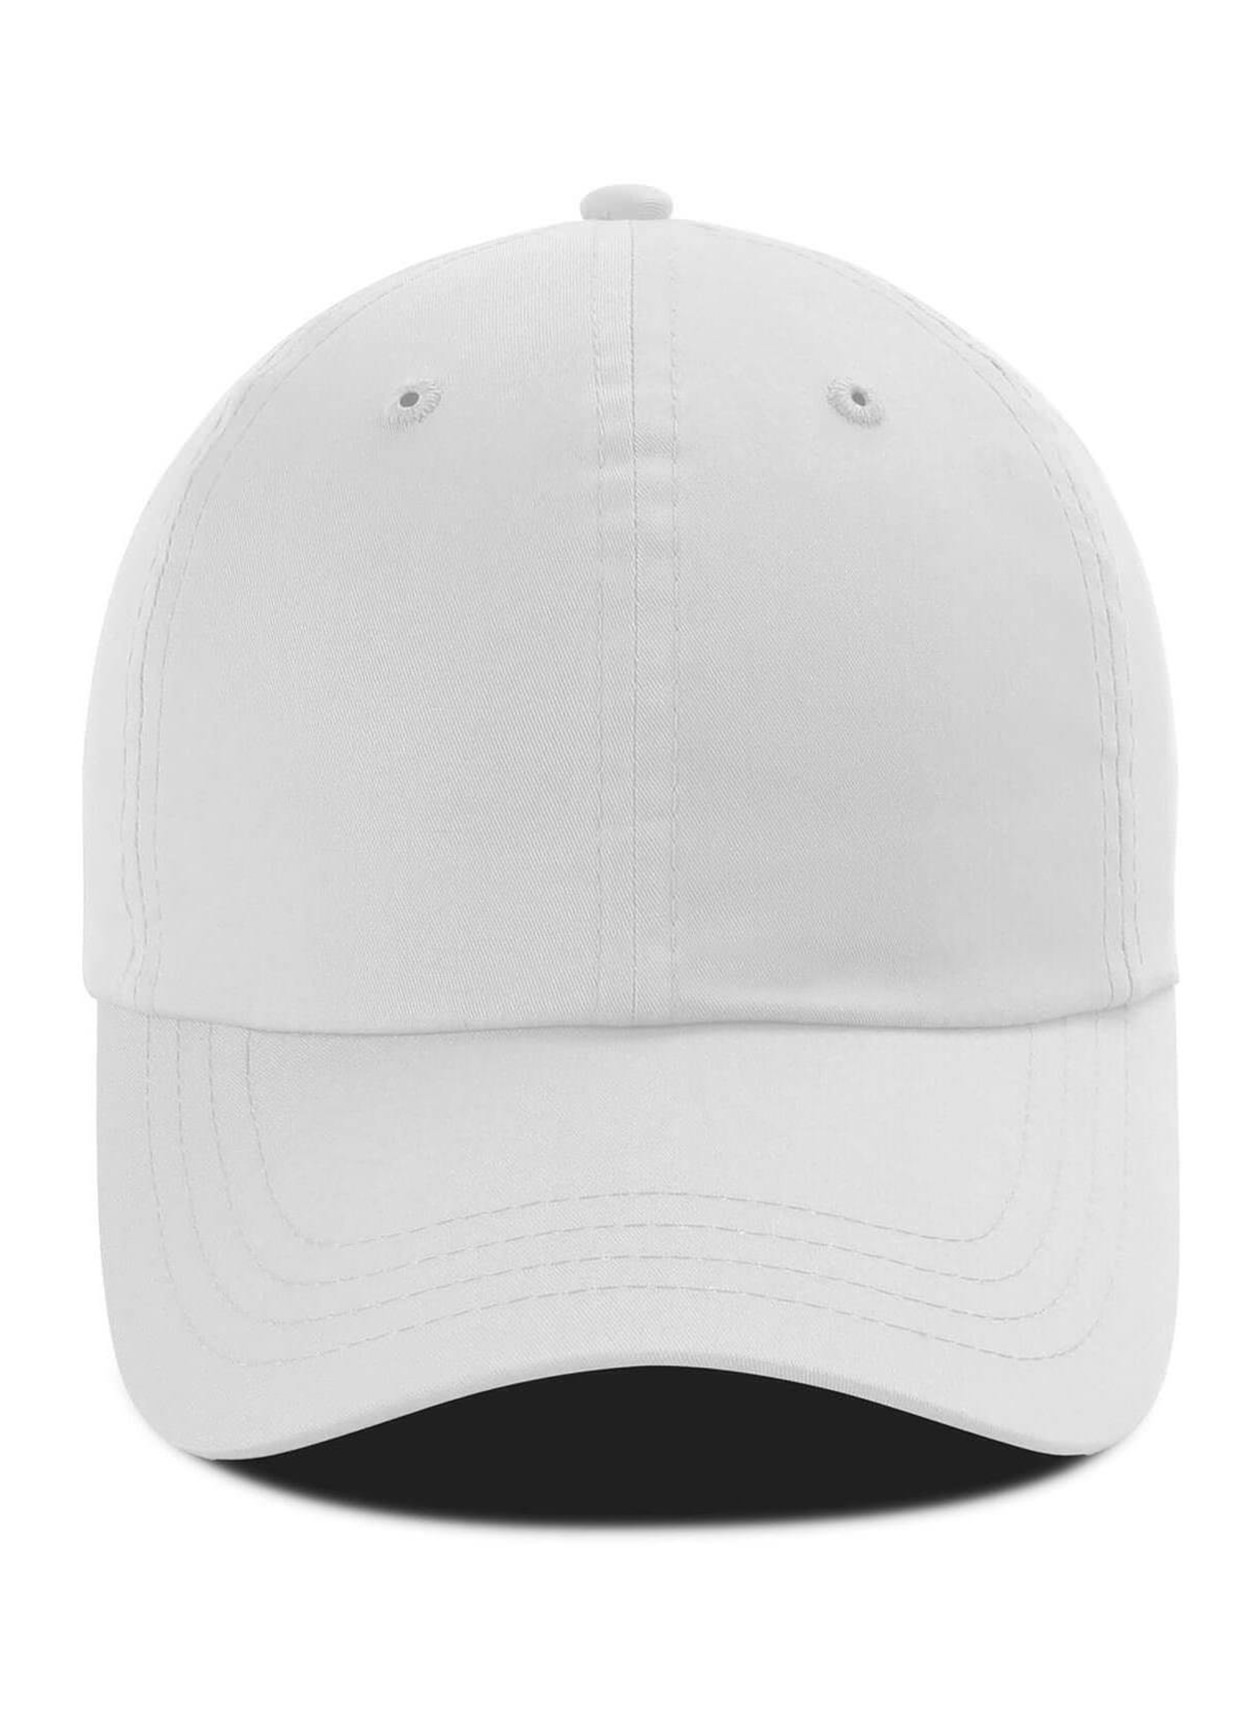 Imperial White The Zero Lightweight Cotton Hat